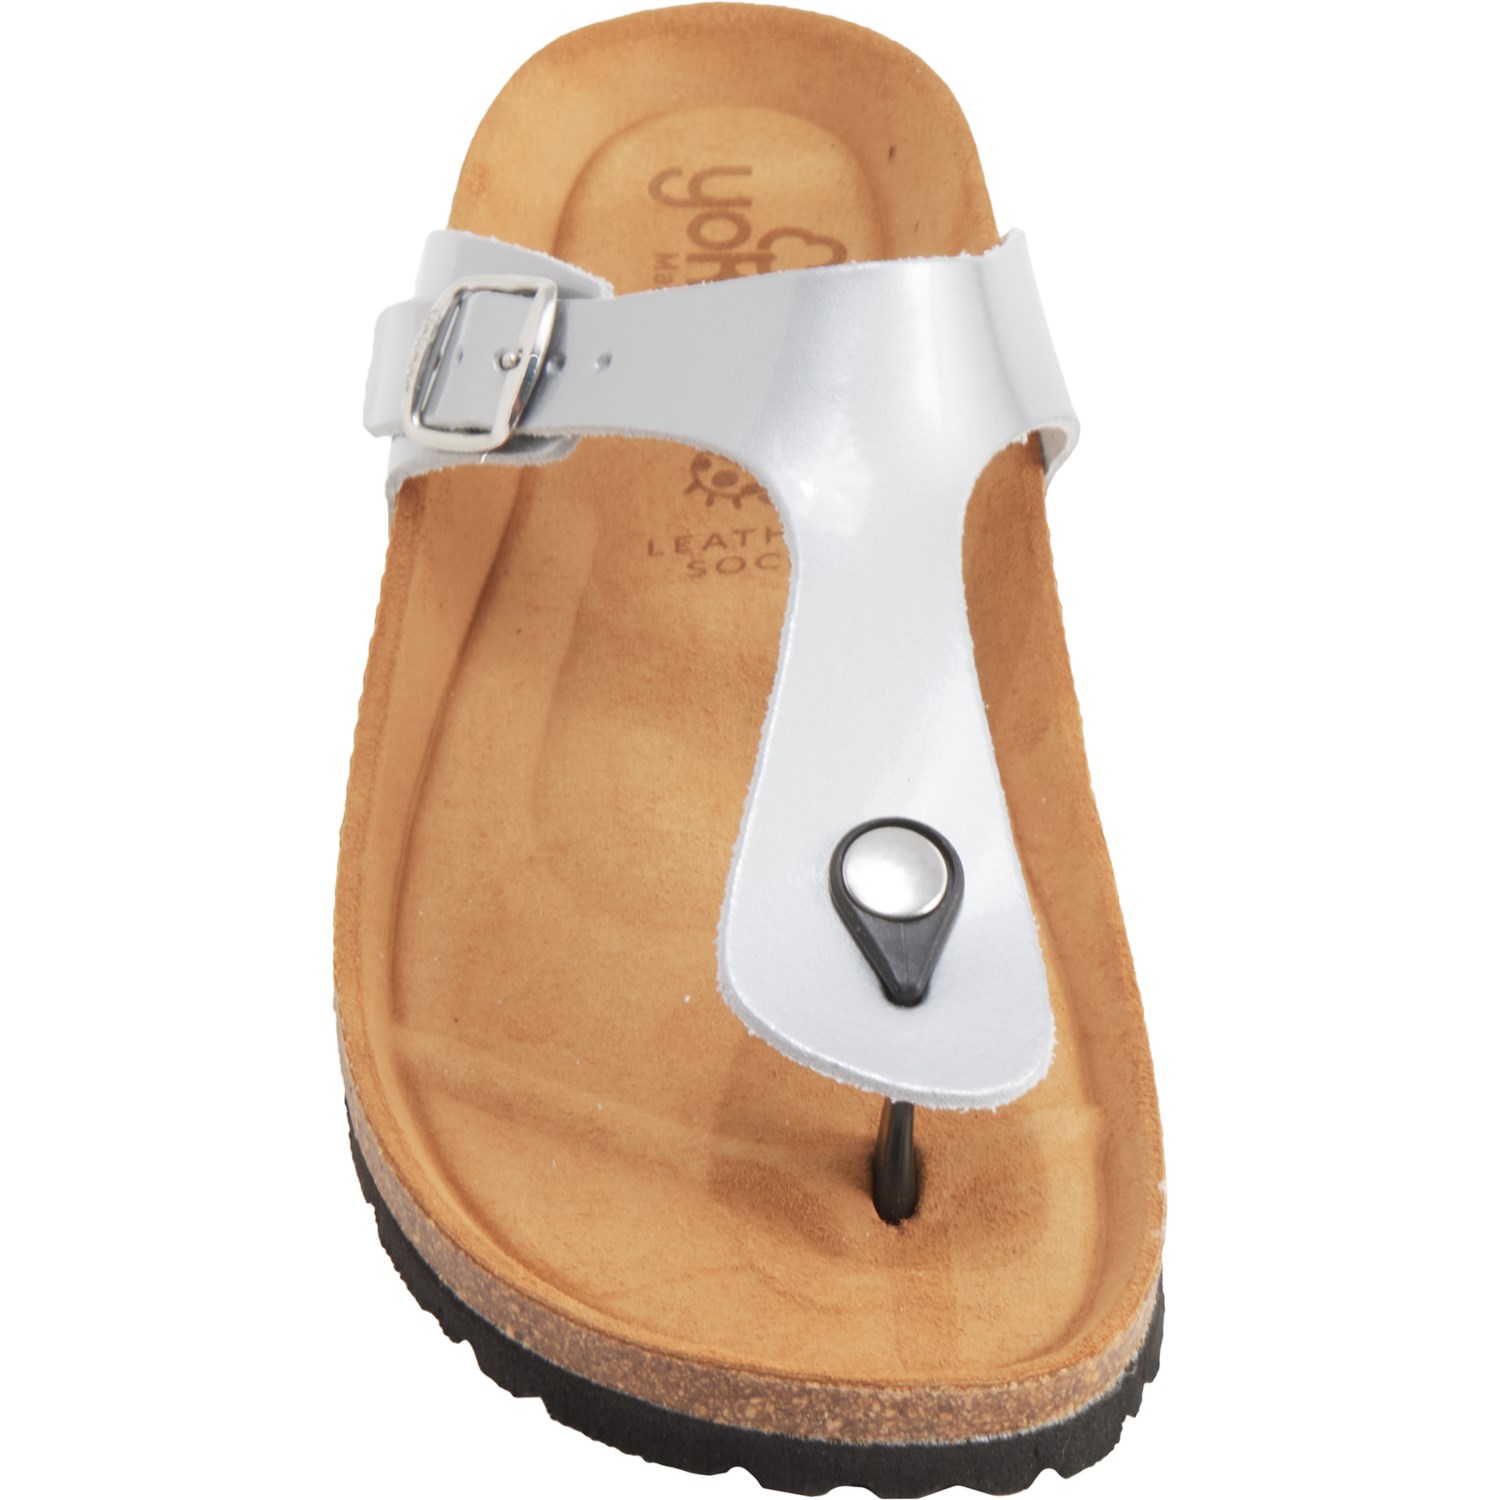 Yokono Made in Spain Toe Thong Sandals (For Women) - Save 44%